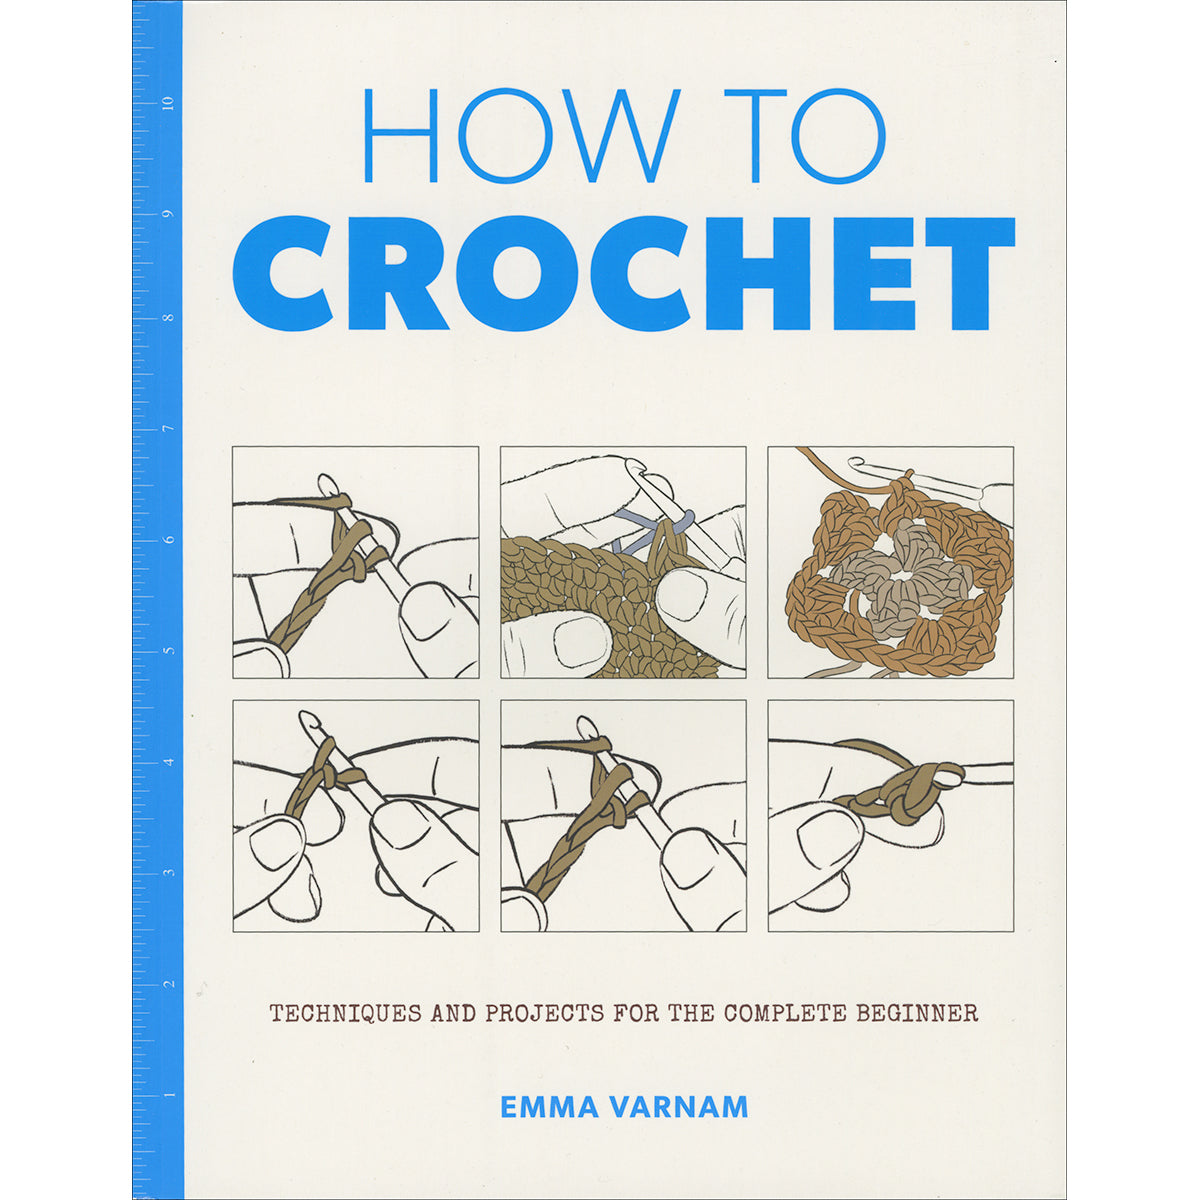 How to Crotchet by Emma Varnam